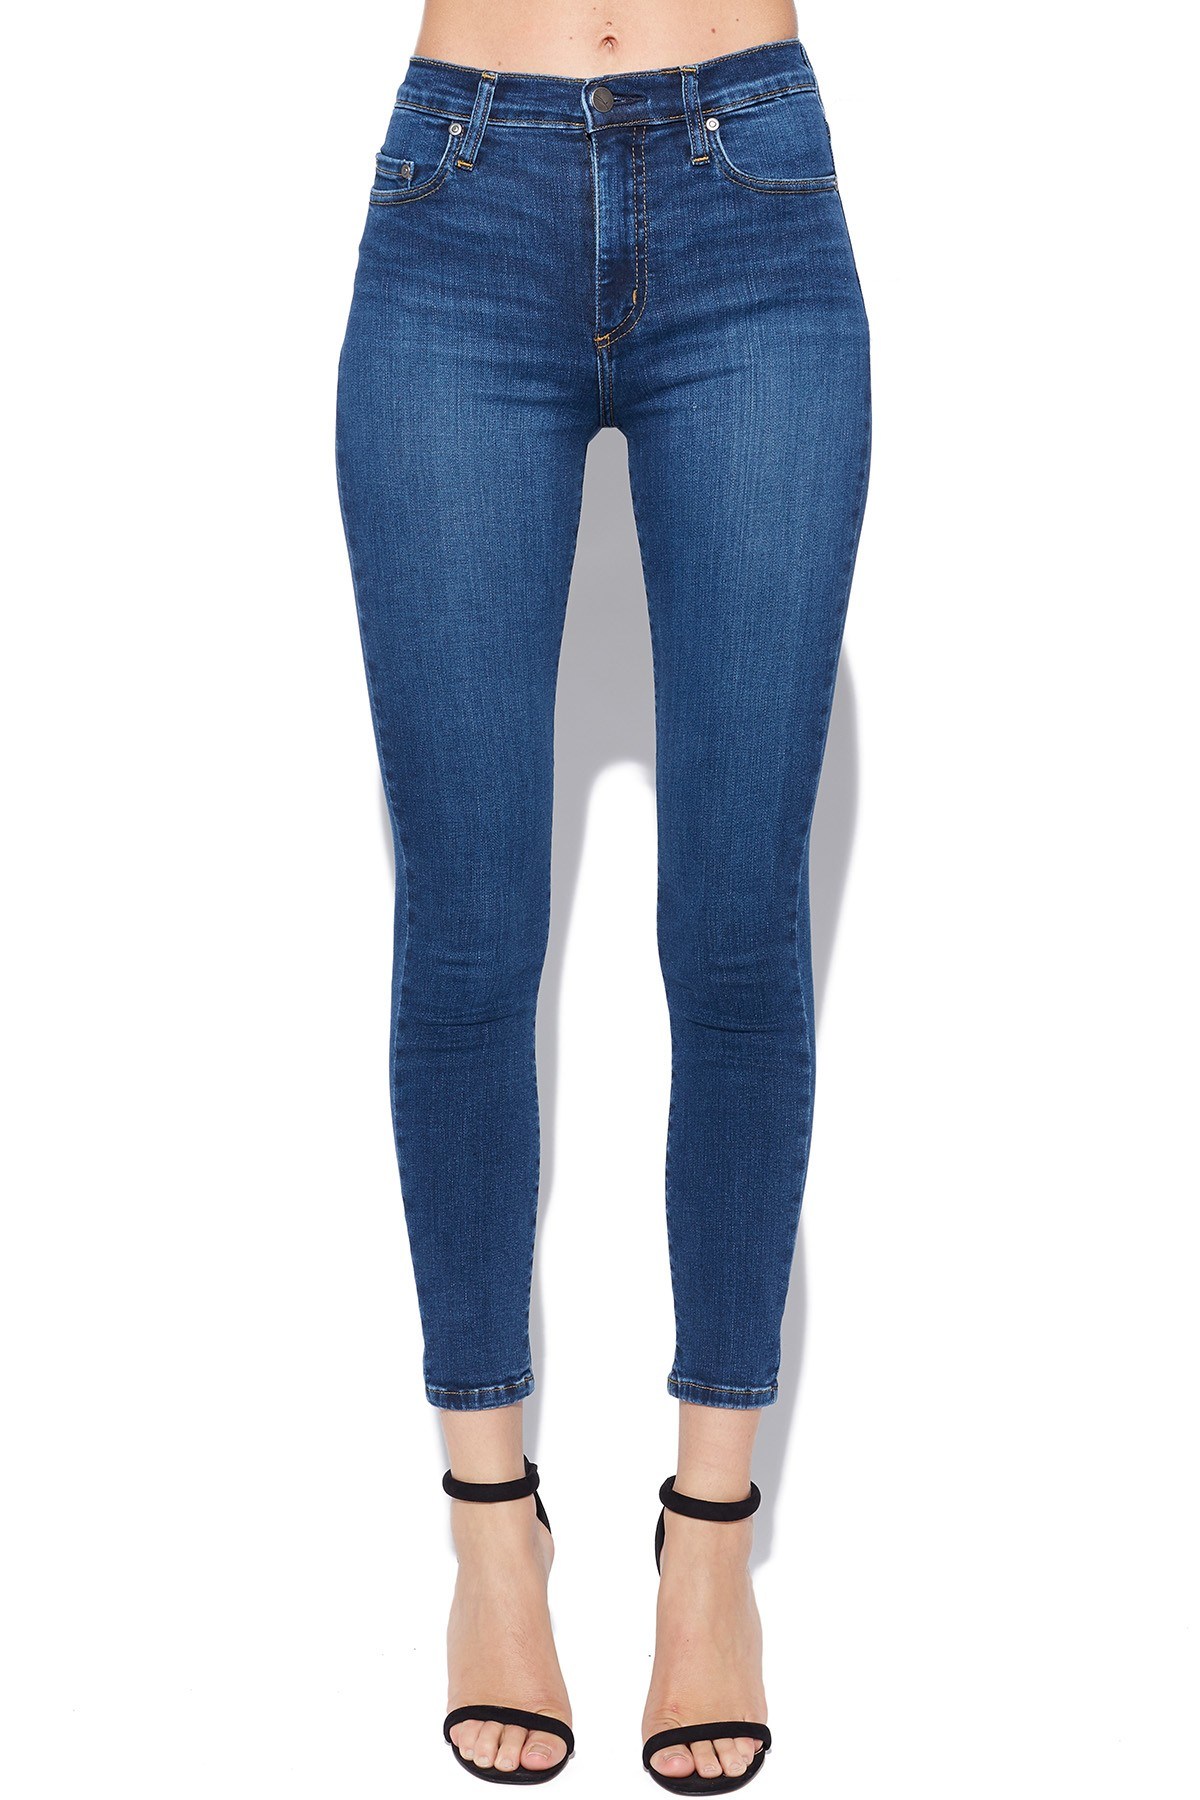 Sexy Ladies Skinny Elastic Jeans with Custom Brand Label